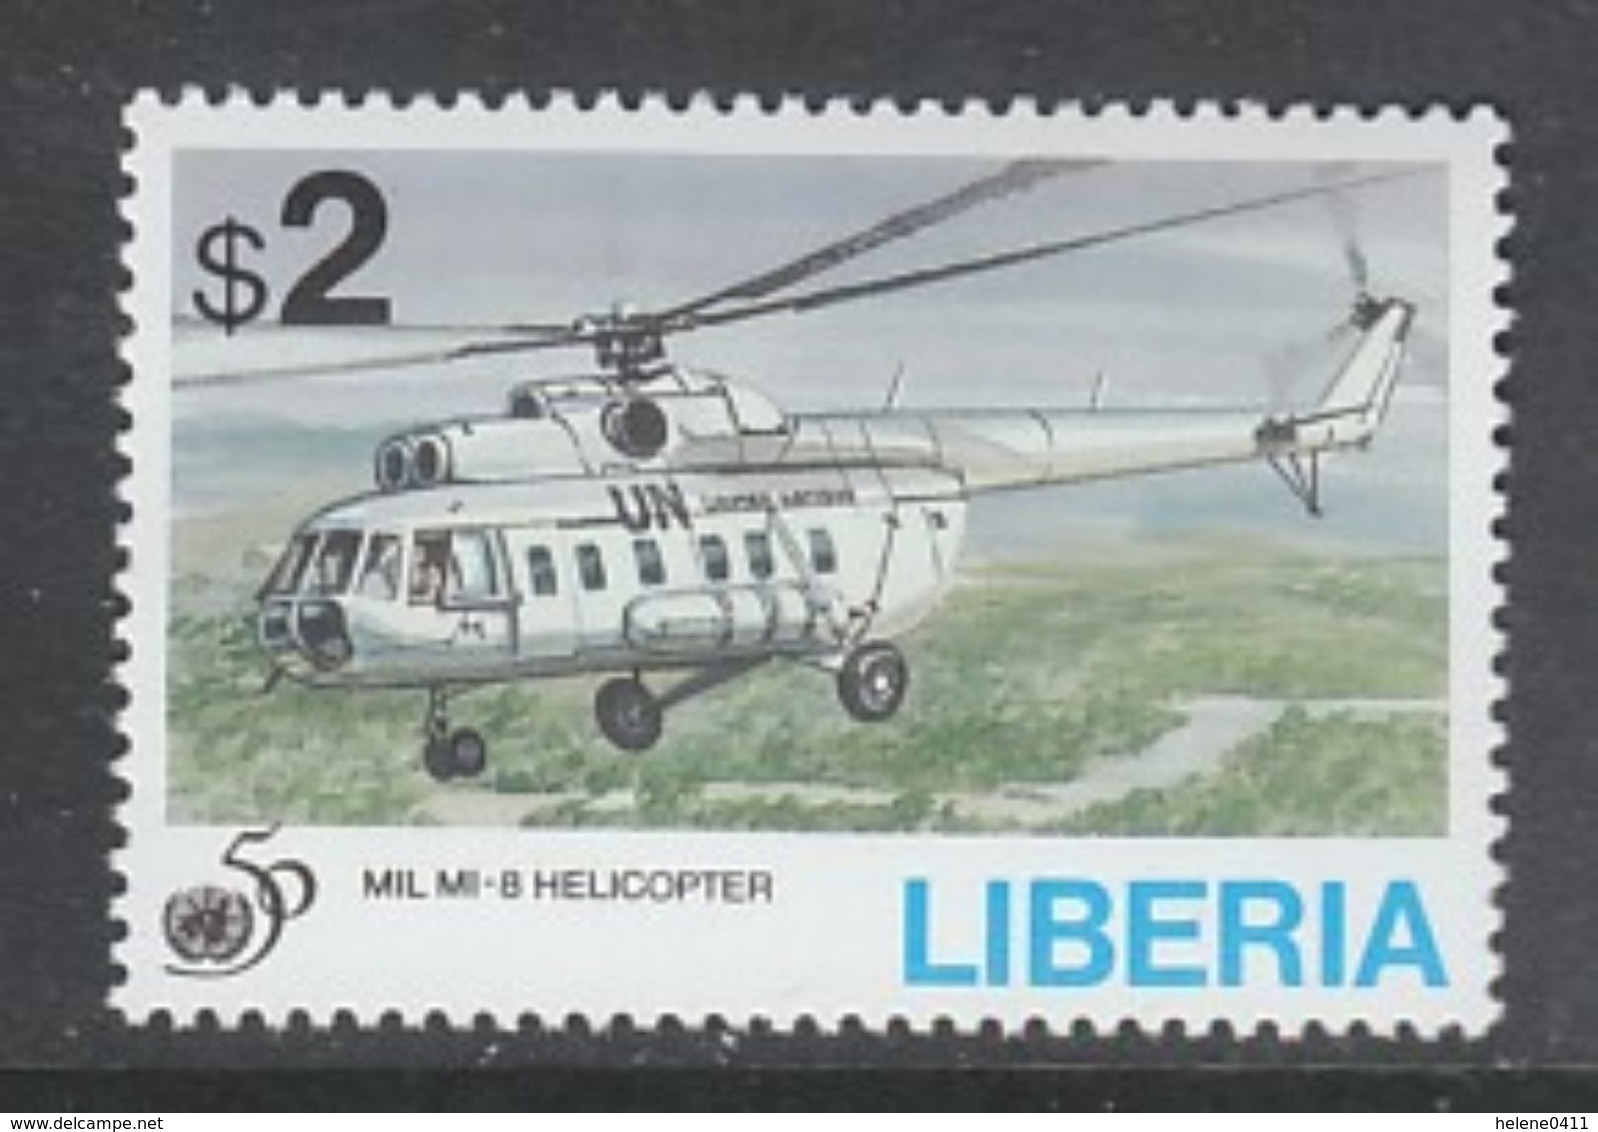 TIMBRE NEUF DU LIBERIA - HELICOPTERE MIL MI-8 (50E ANNIVERSAIRE DES NATIONS UNIES) N° Y&T 1298 - Hélicoptères